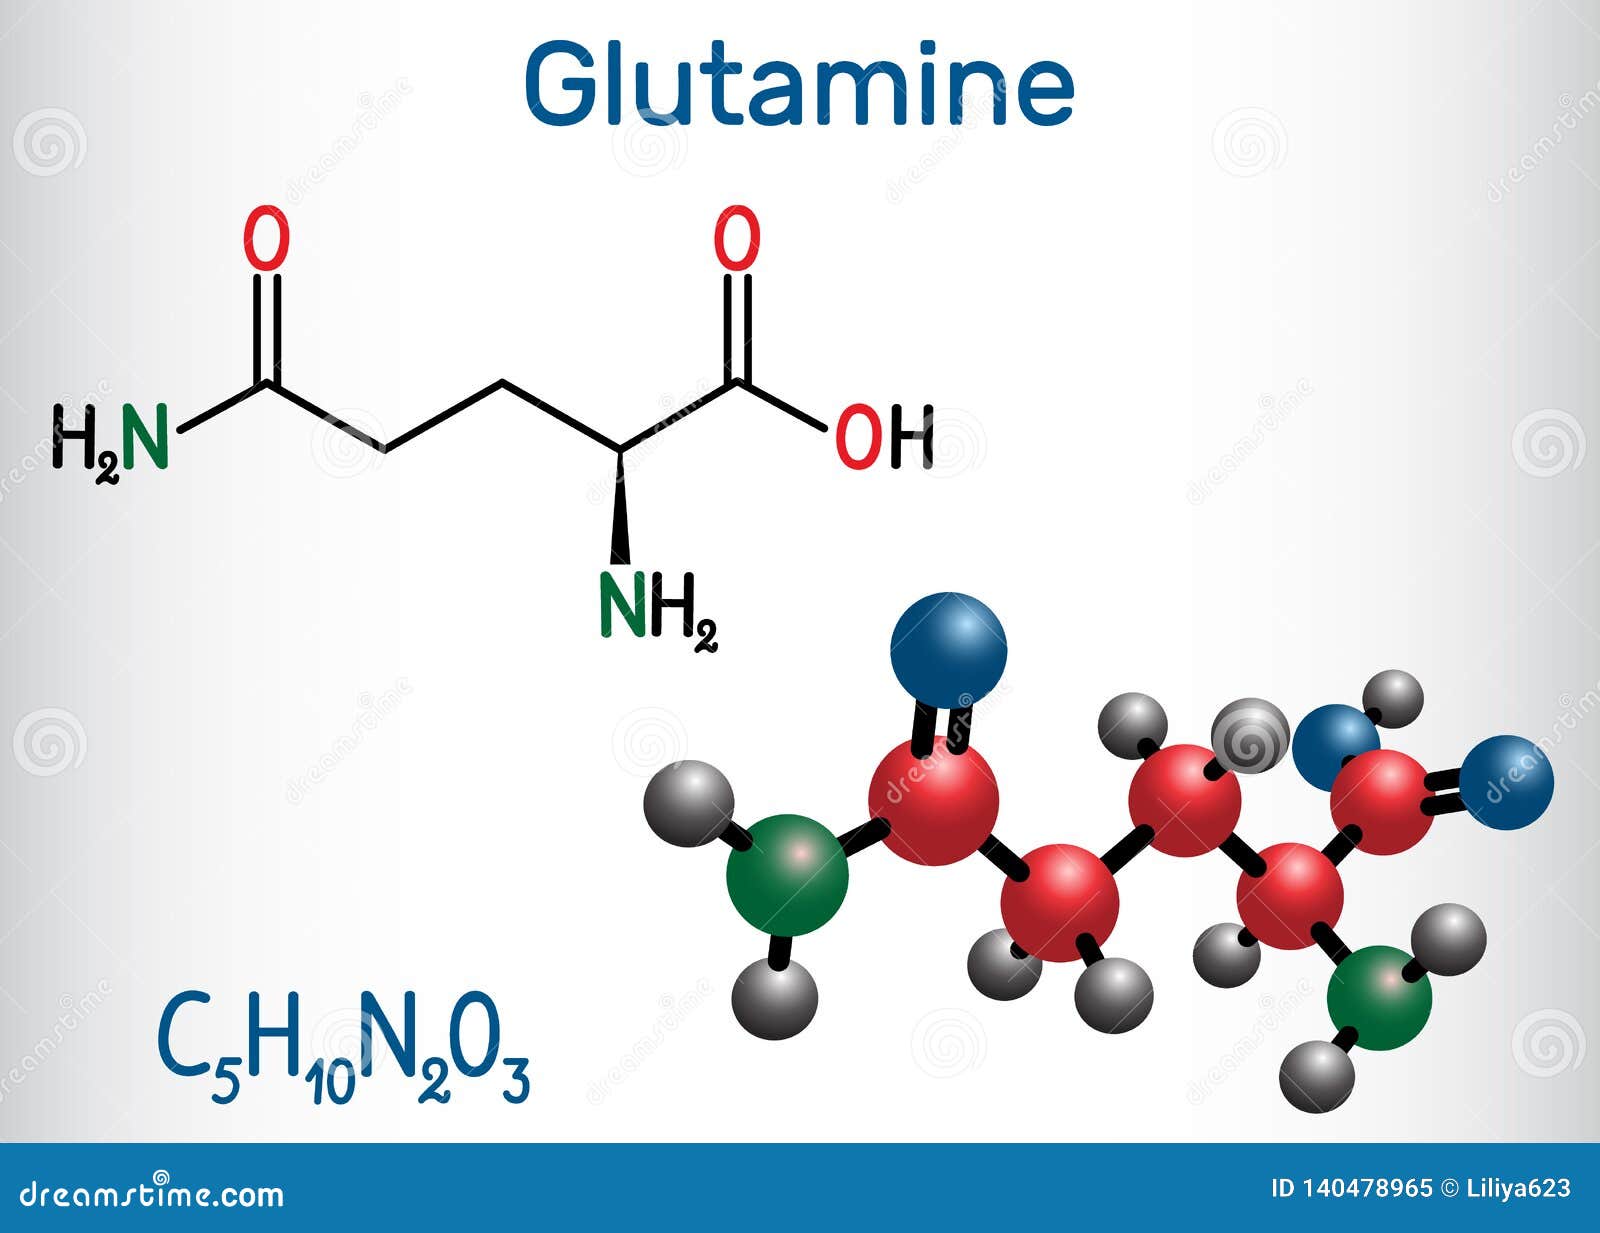 Amino Acids - Glutamine